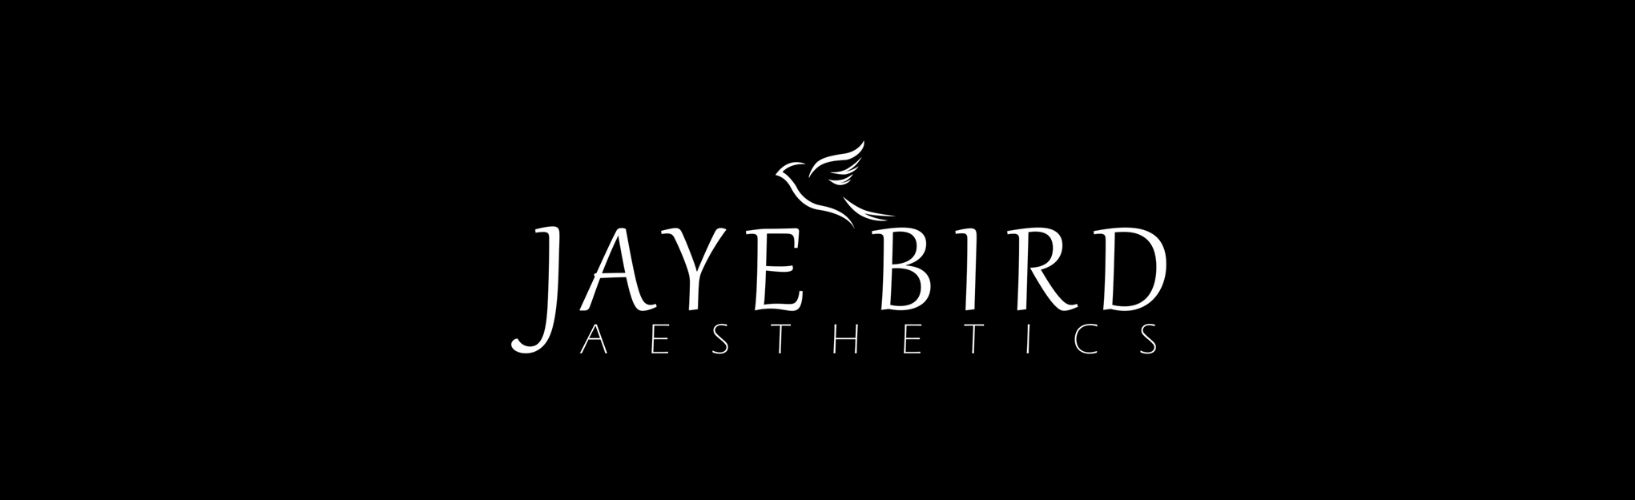 Jaye Bird Aesthetics Banner